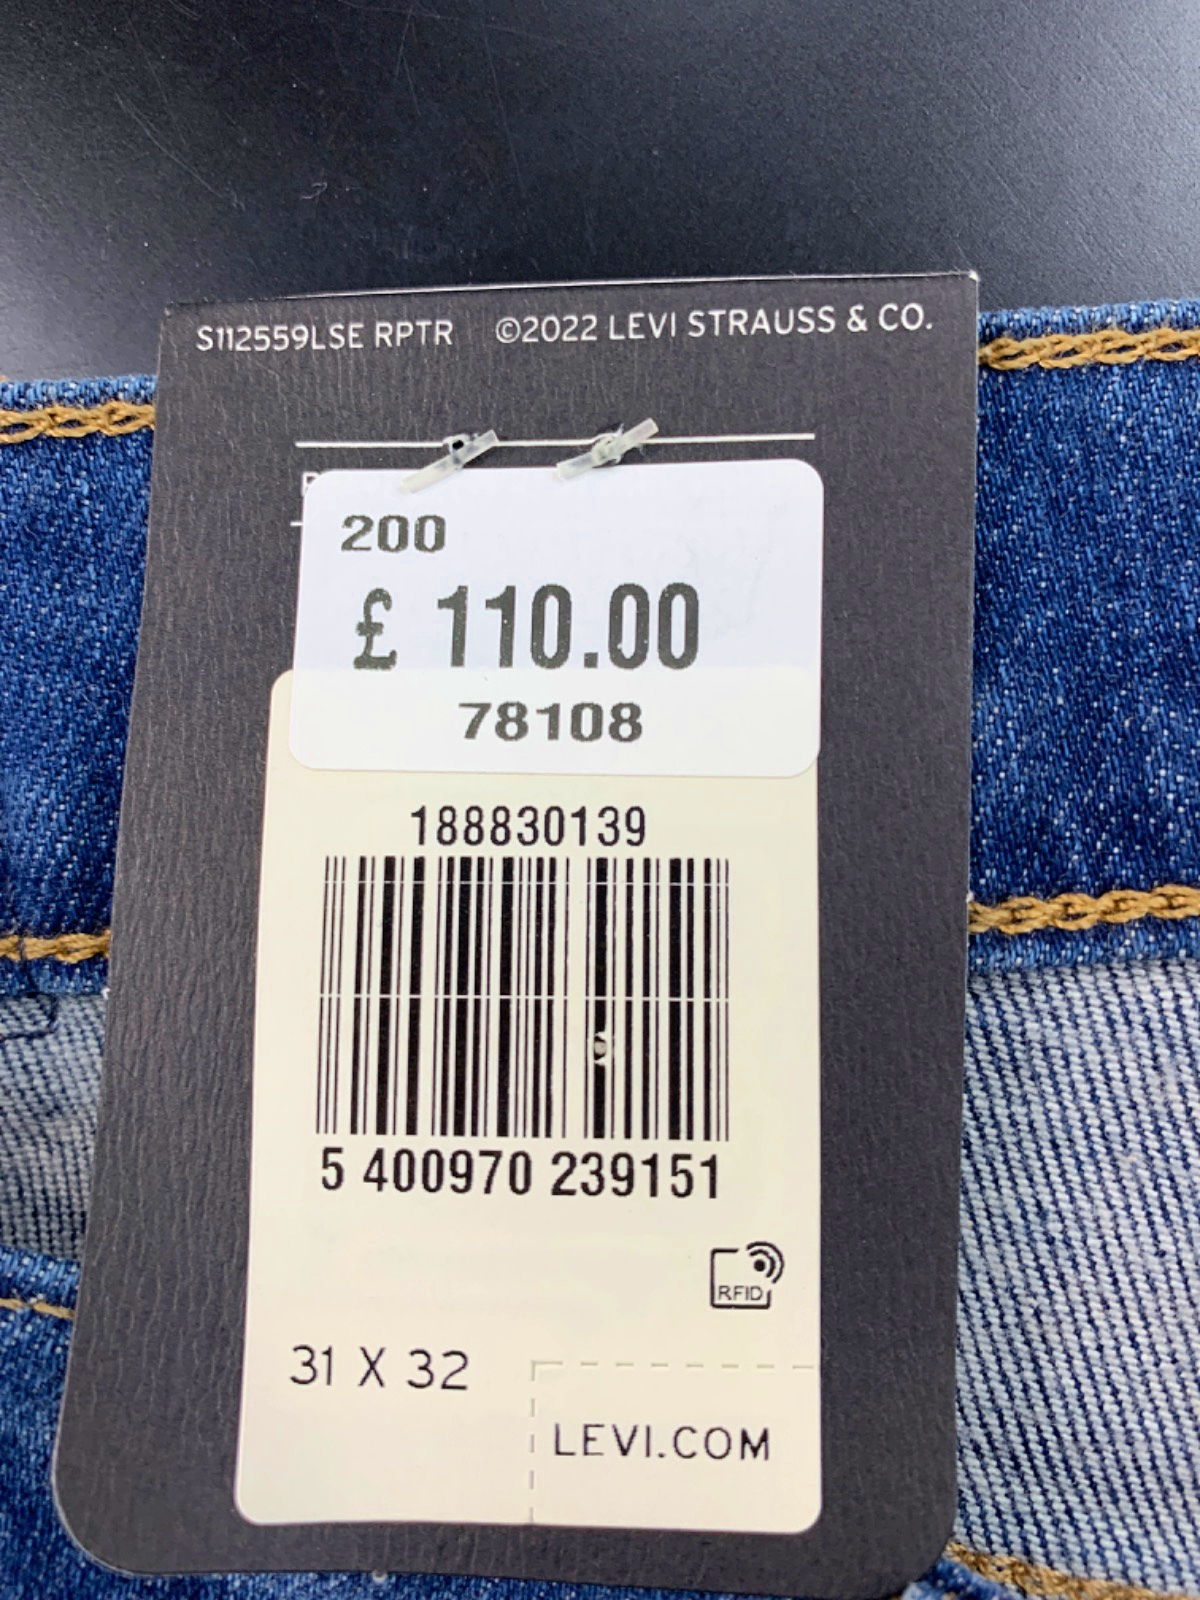 Levi's Blue 724 High-Rise Slim Straight Jeans W31